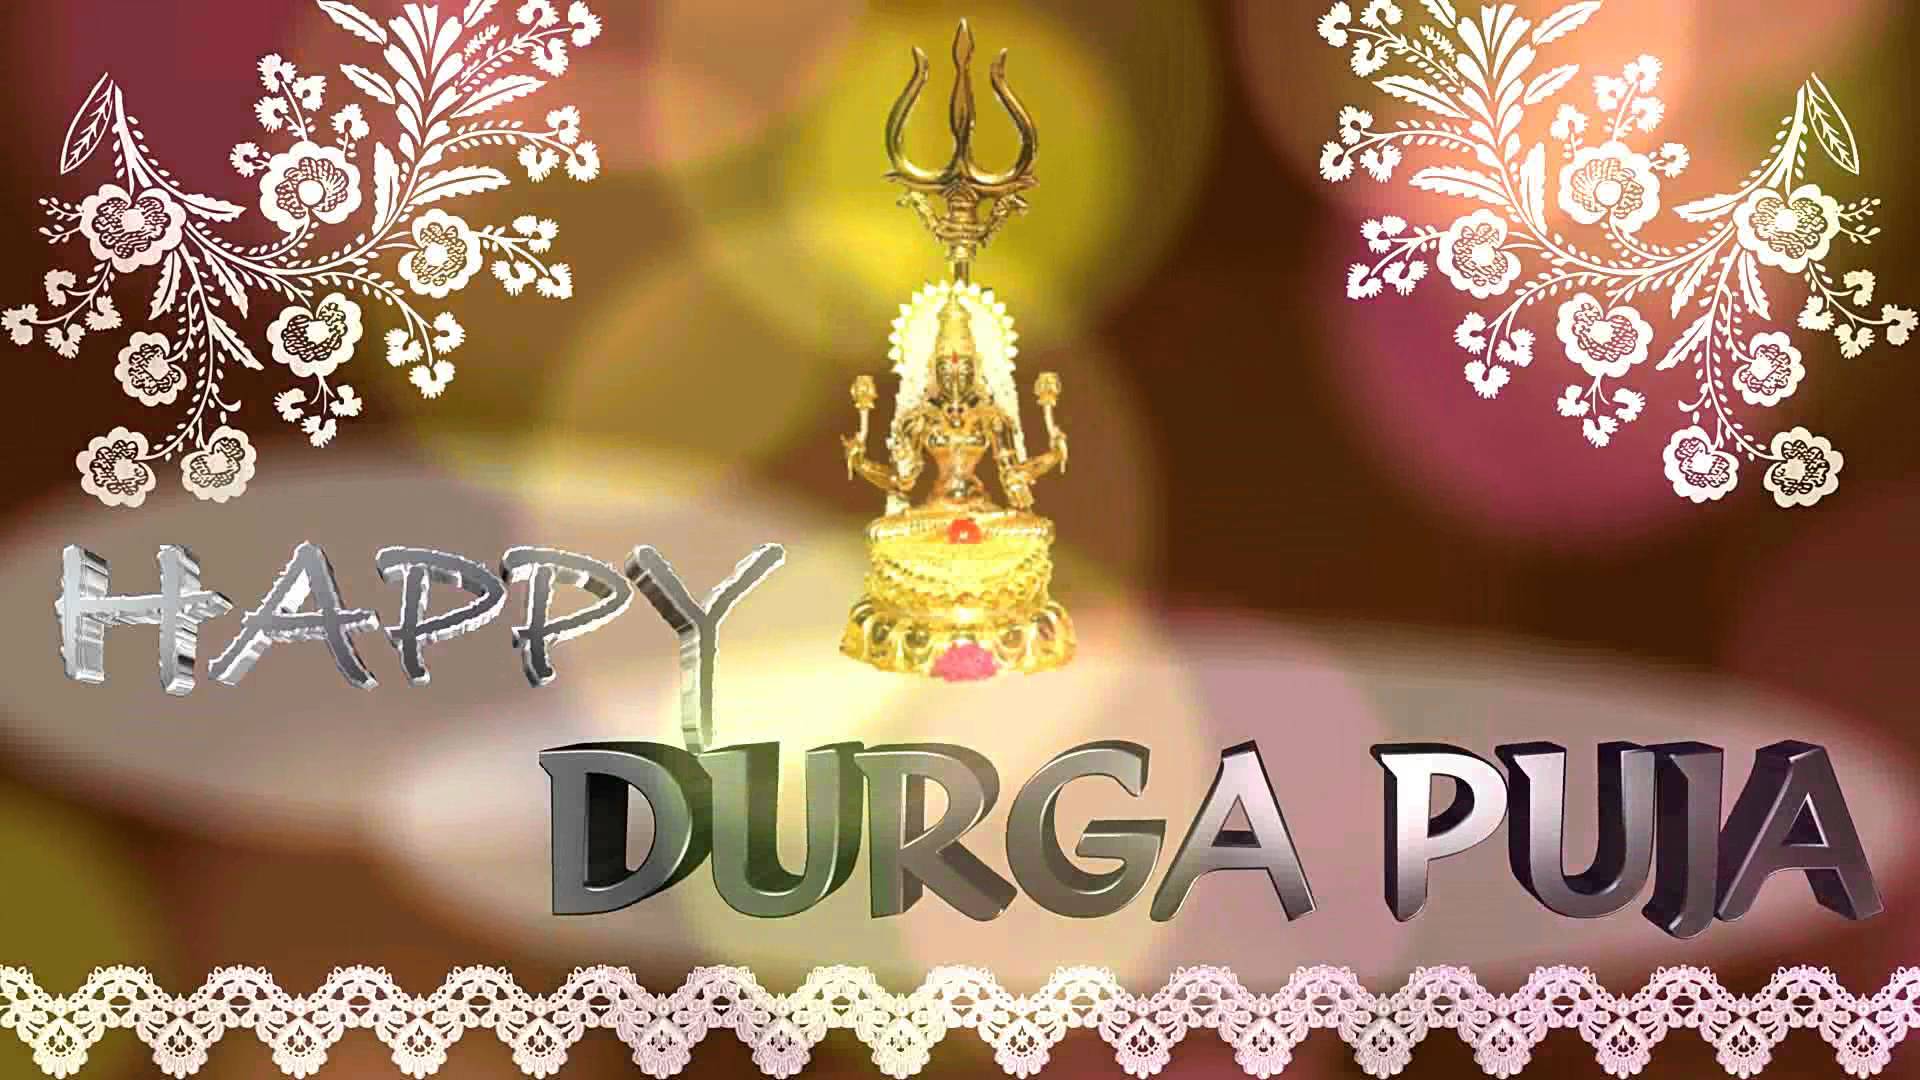 Happy Durga Puja 2017 Wallpaper